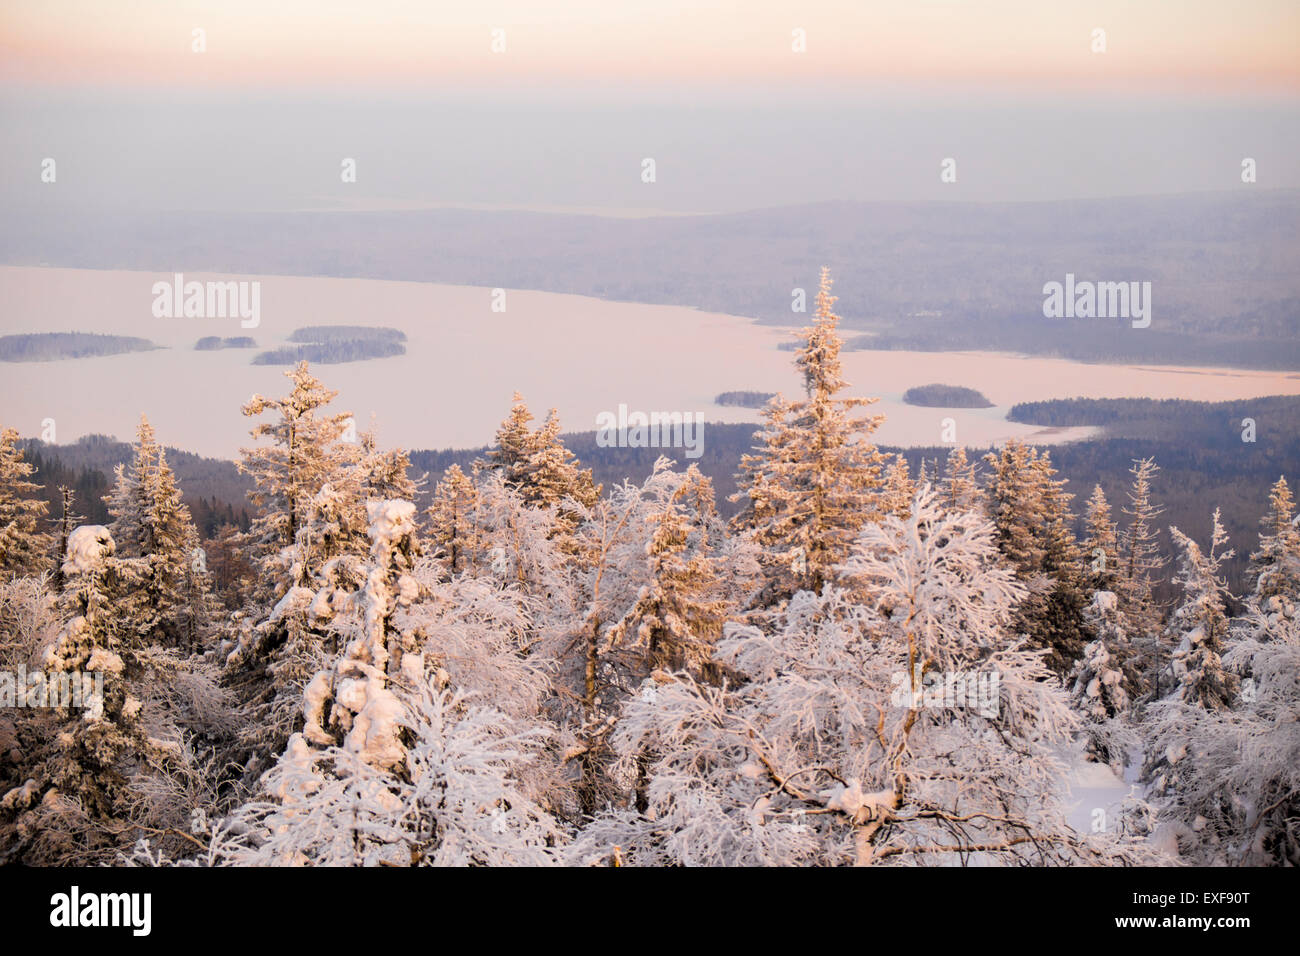 View of snow covered tree tops and distant lake, Nizhniy Tagil, Sverdlovsk Region, Russia Stock Photo